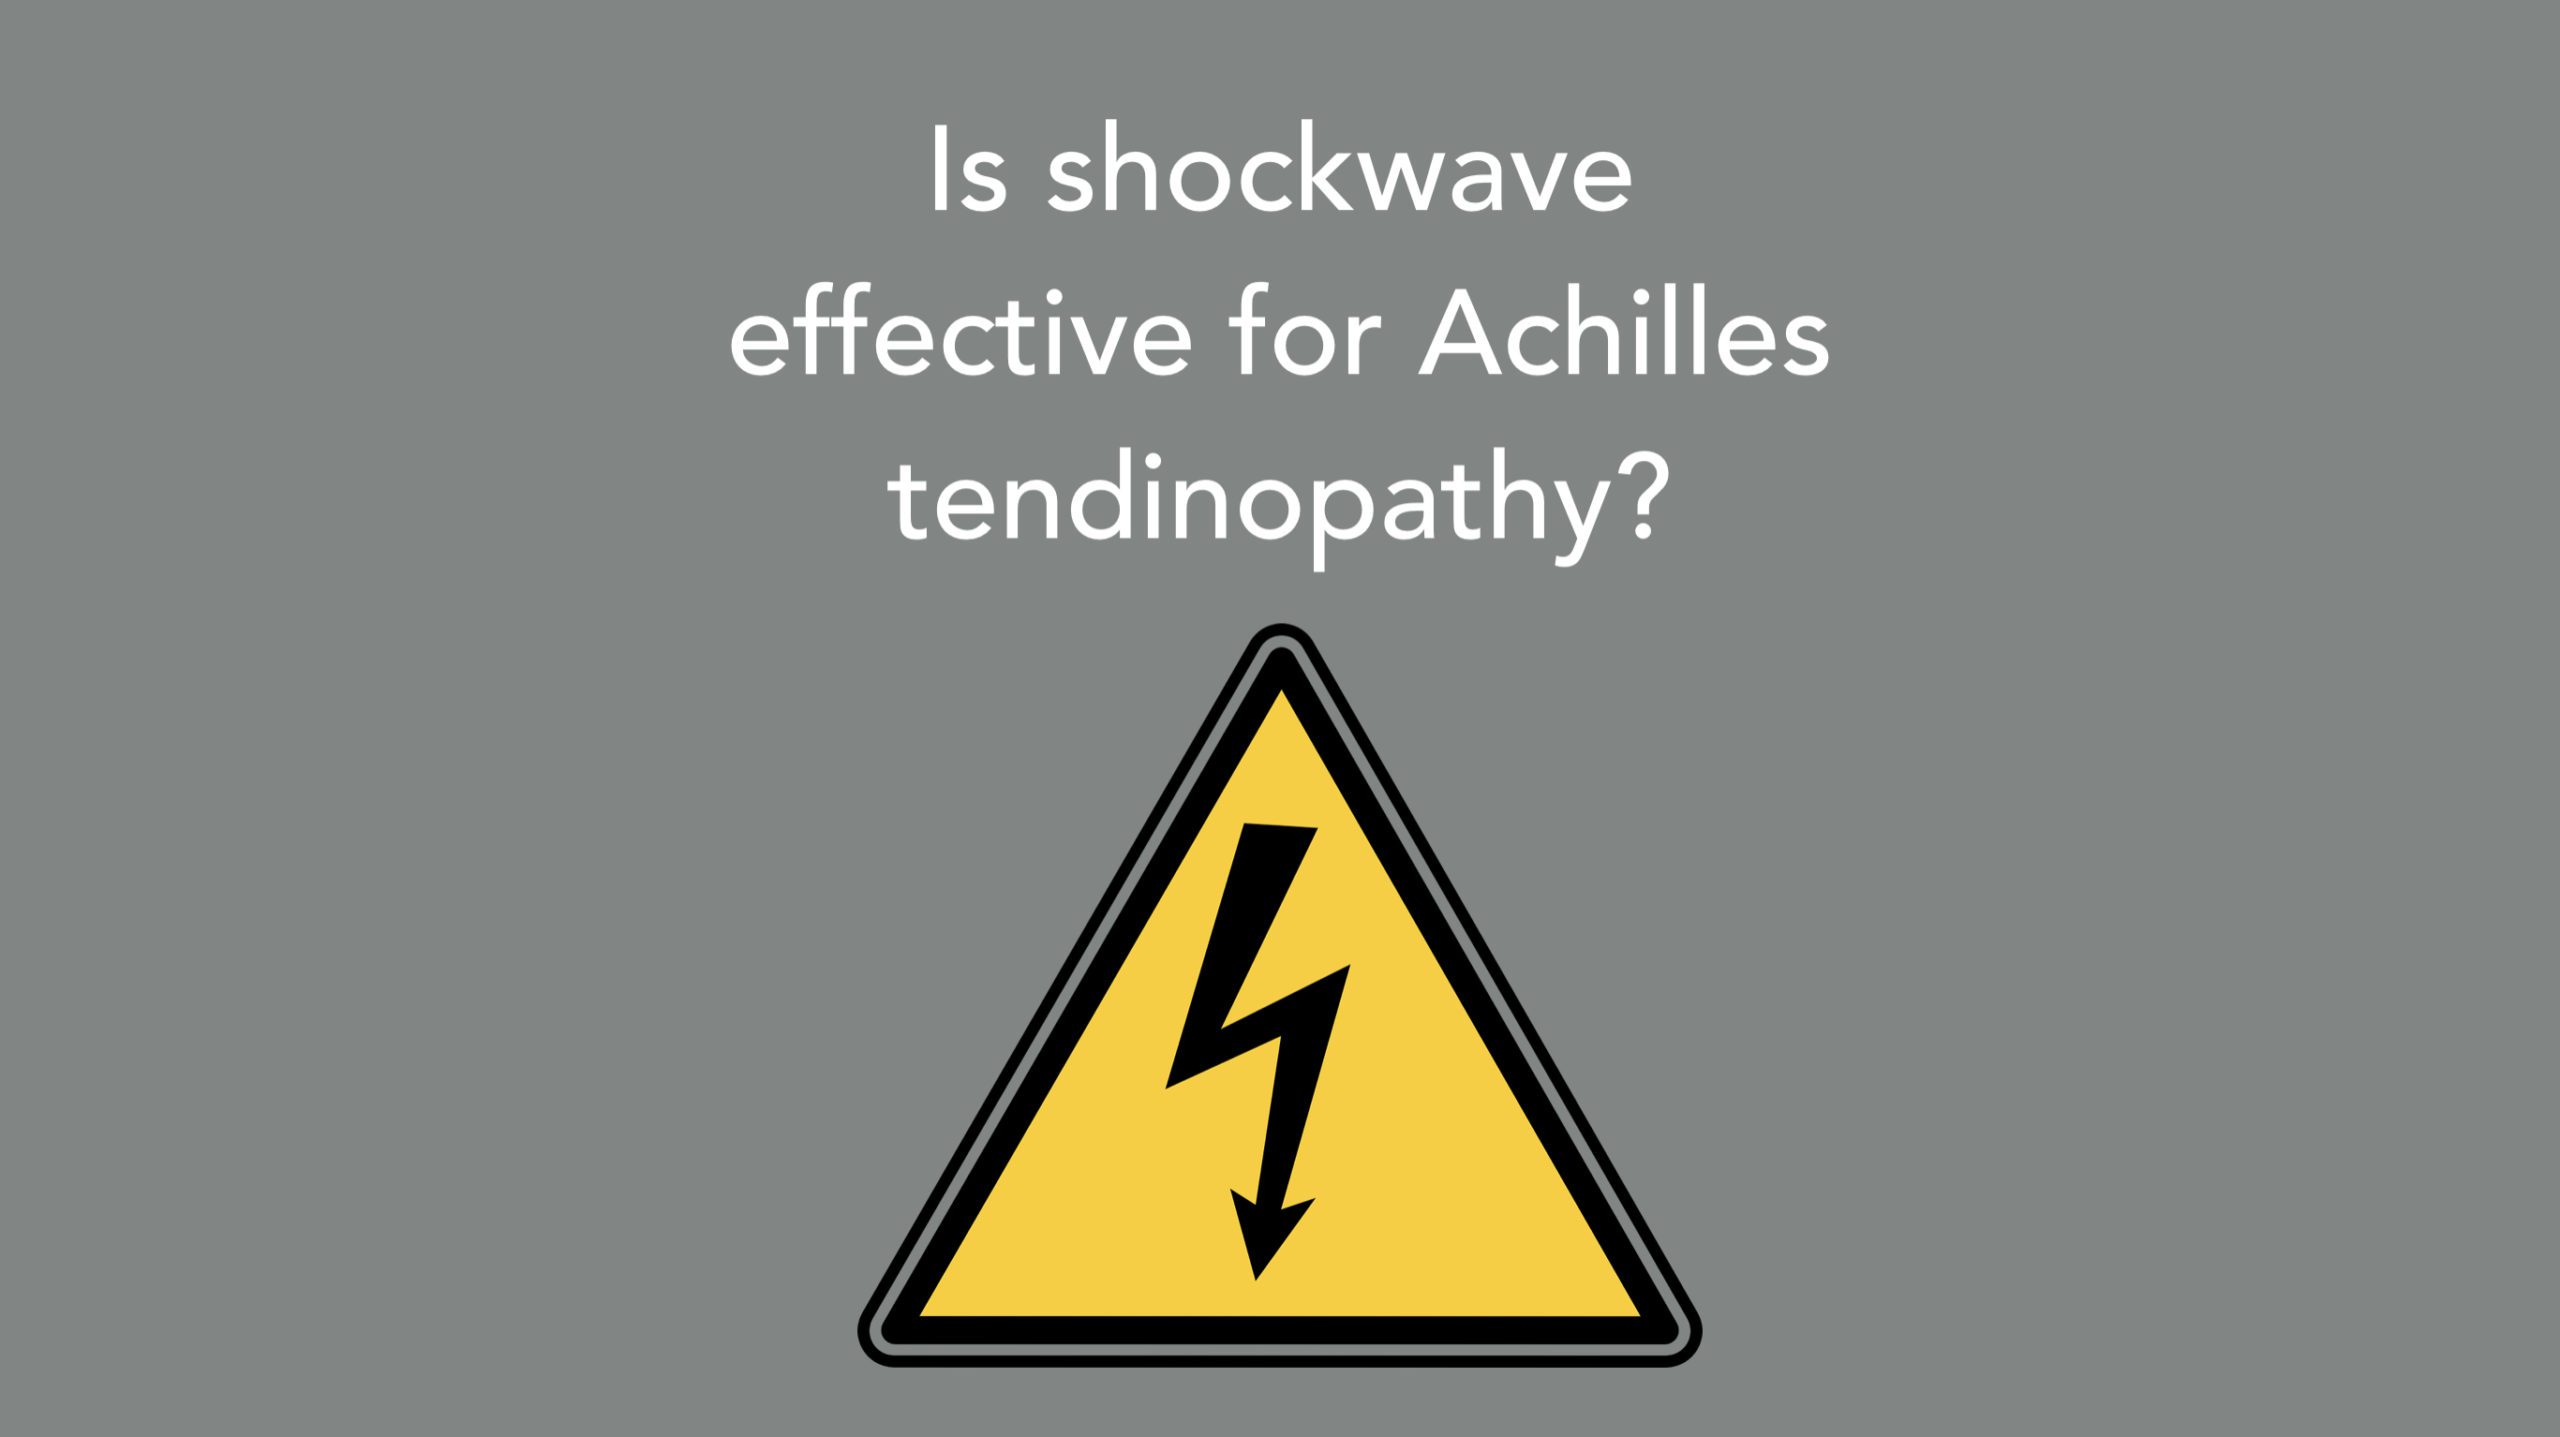 Is shockwave effective for Achilles tendinopathy?